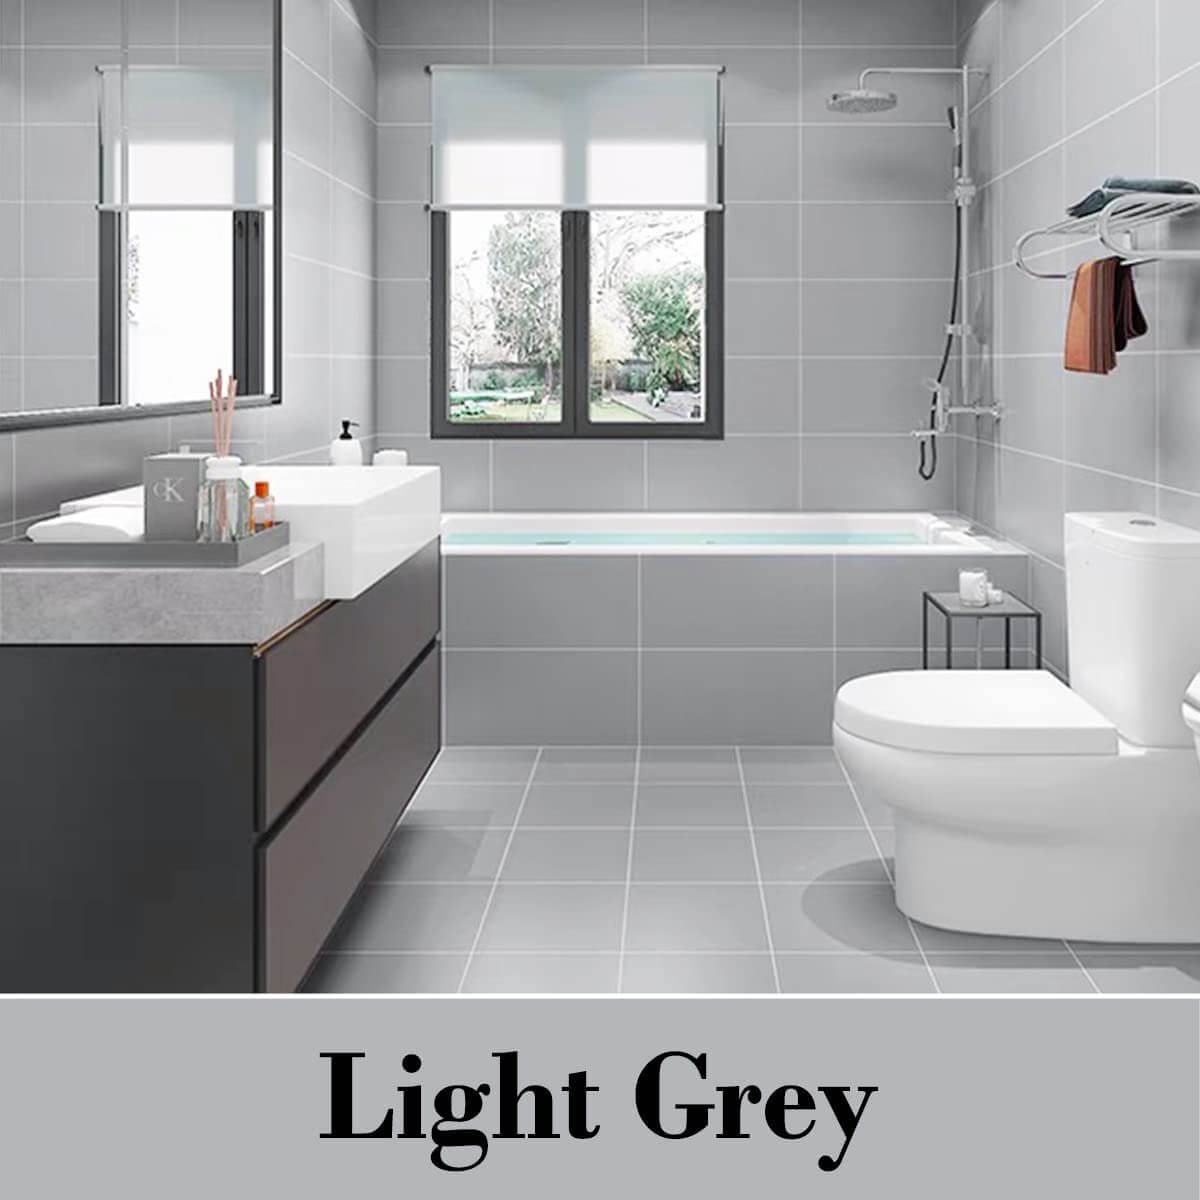 Bathroom and Toilet Lighting - Lighting Equipment Sales